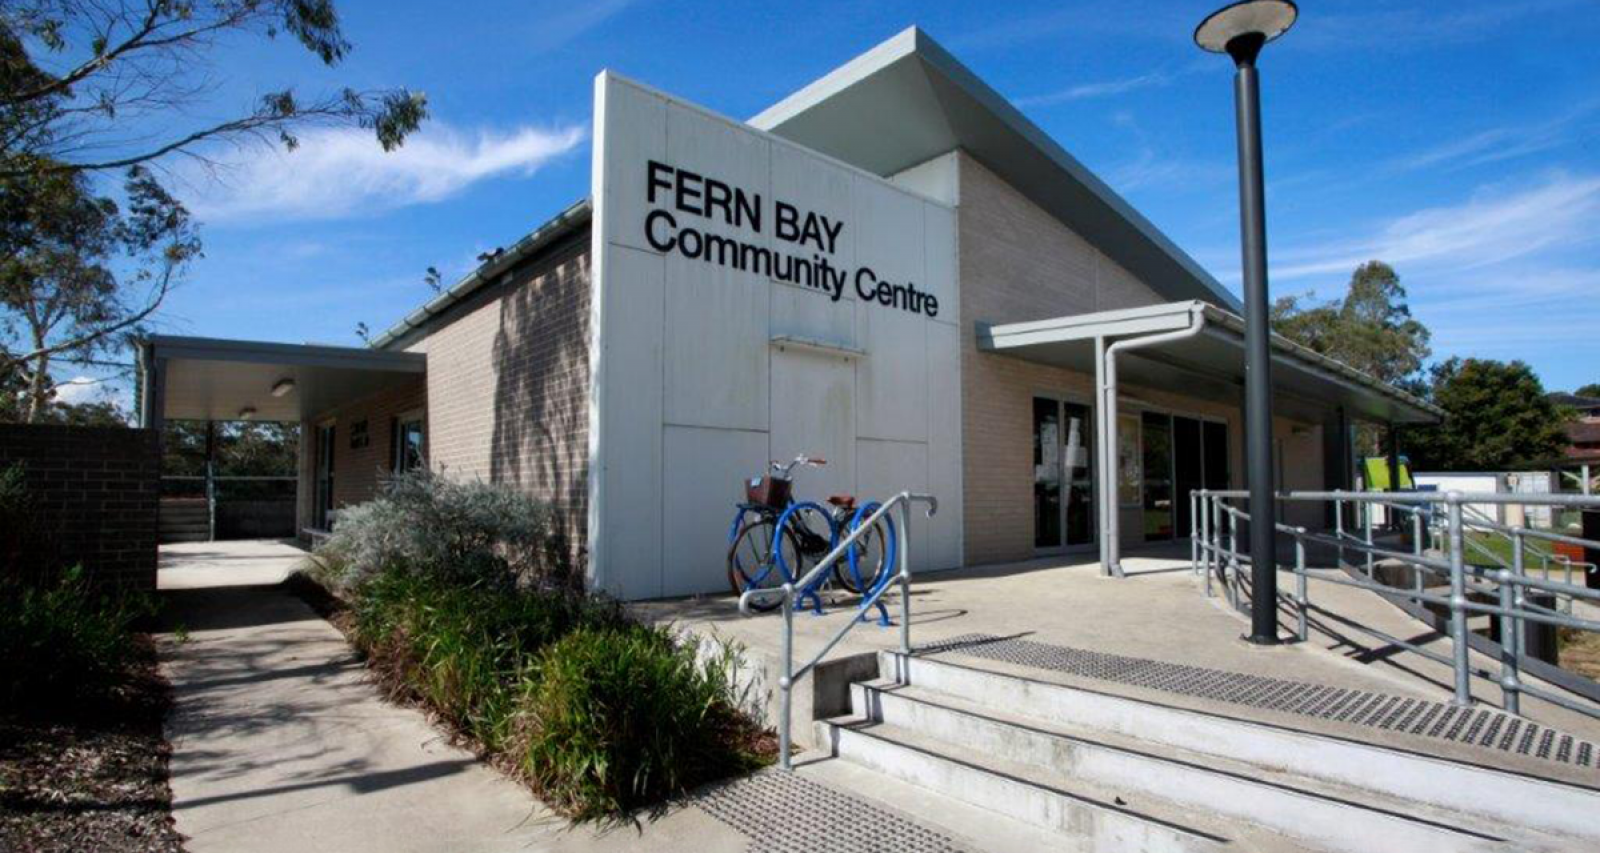 Fern Bay hall banner banner image